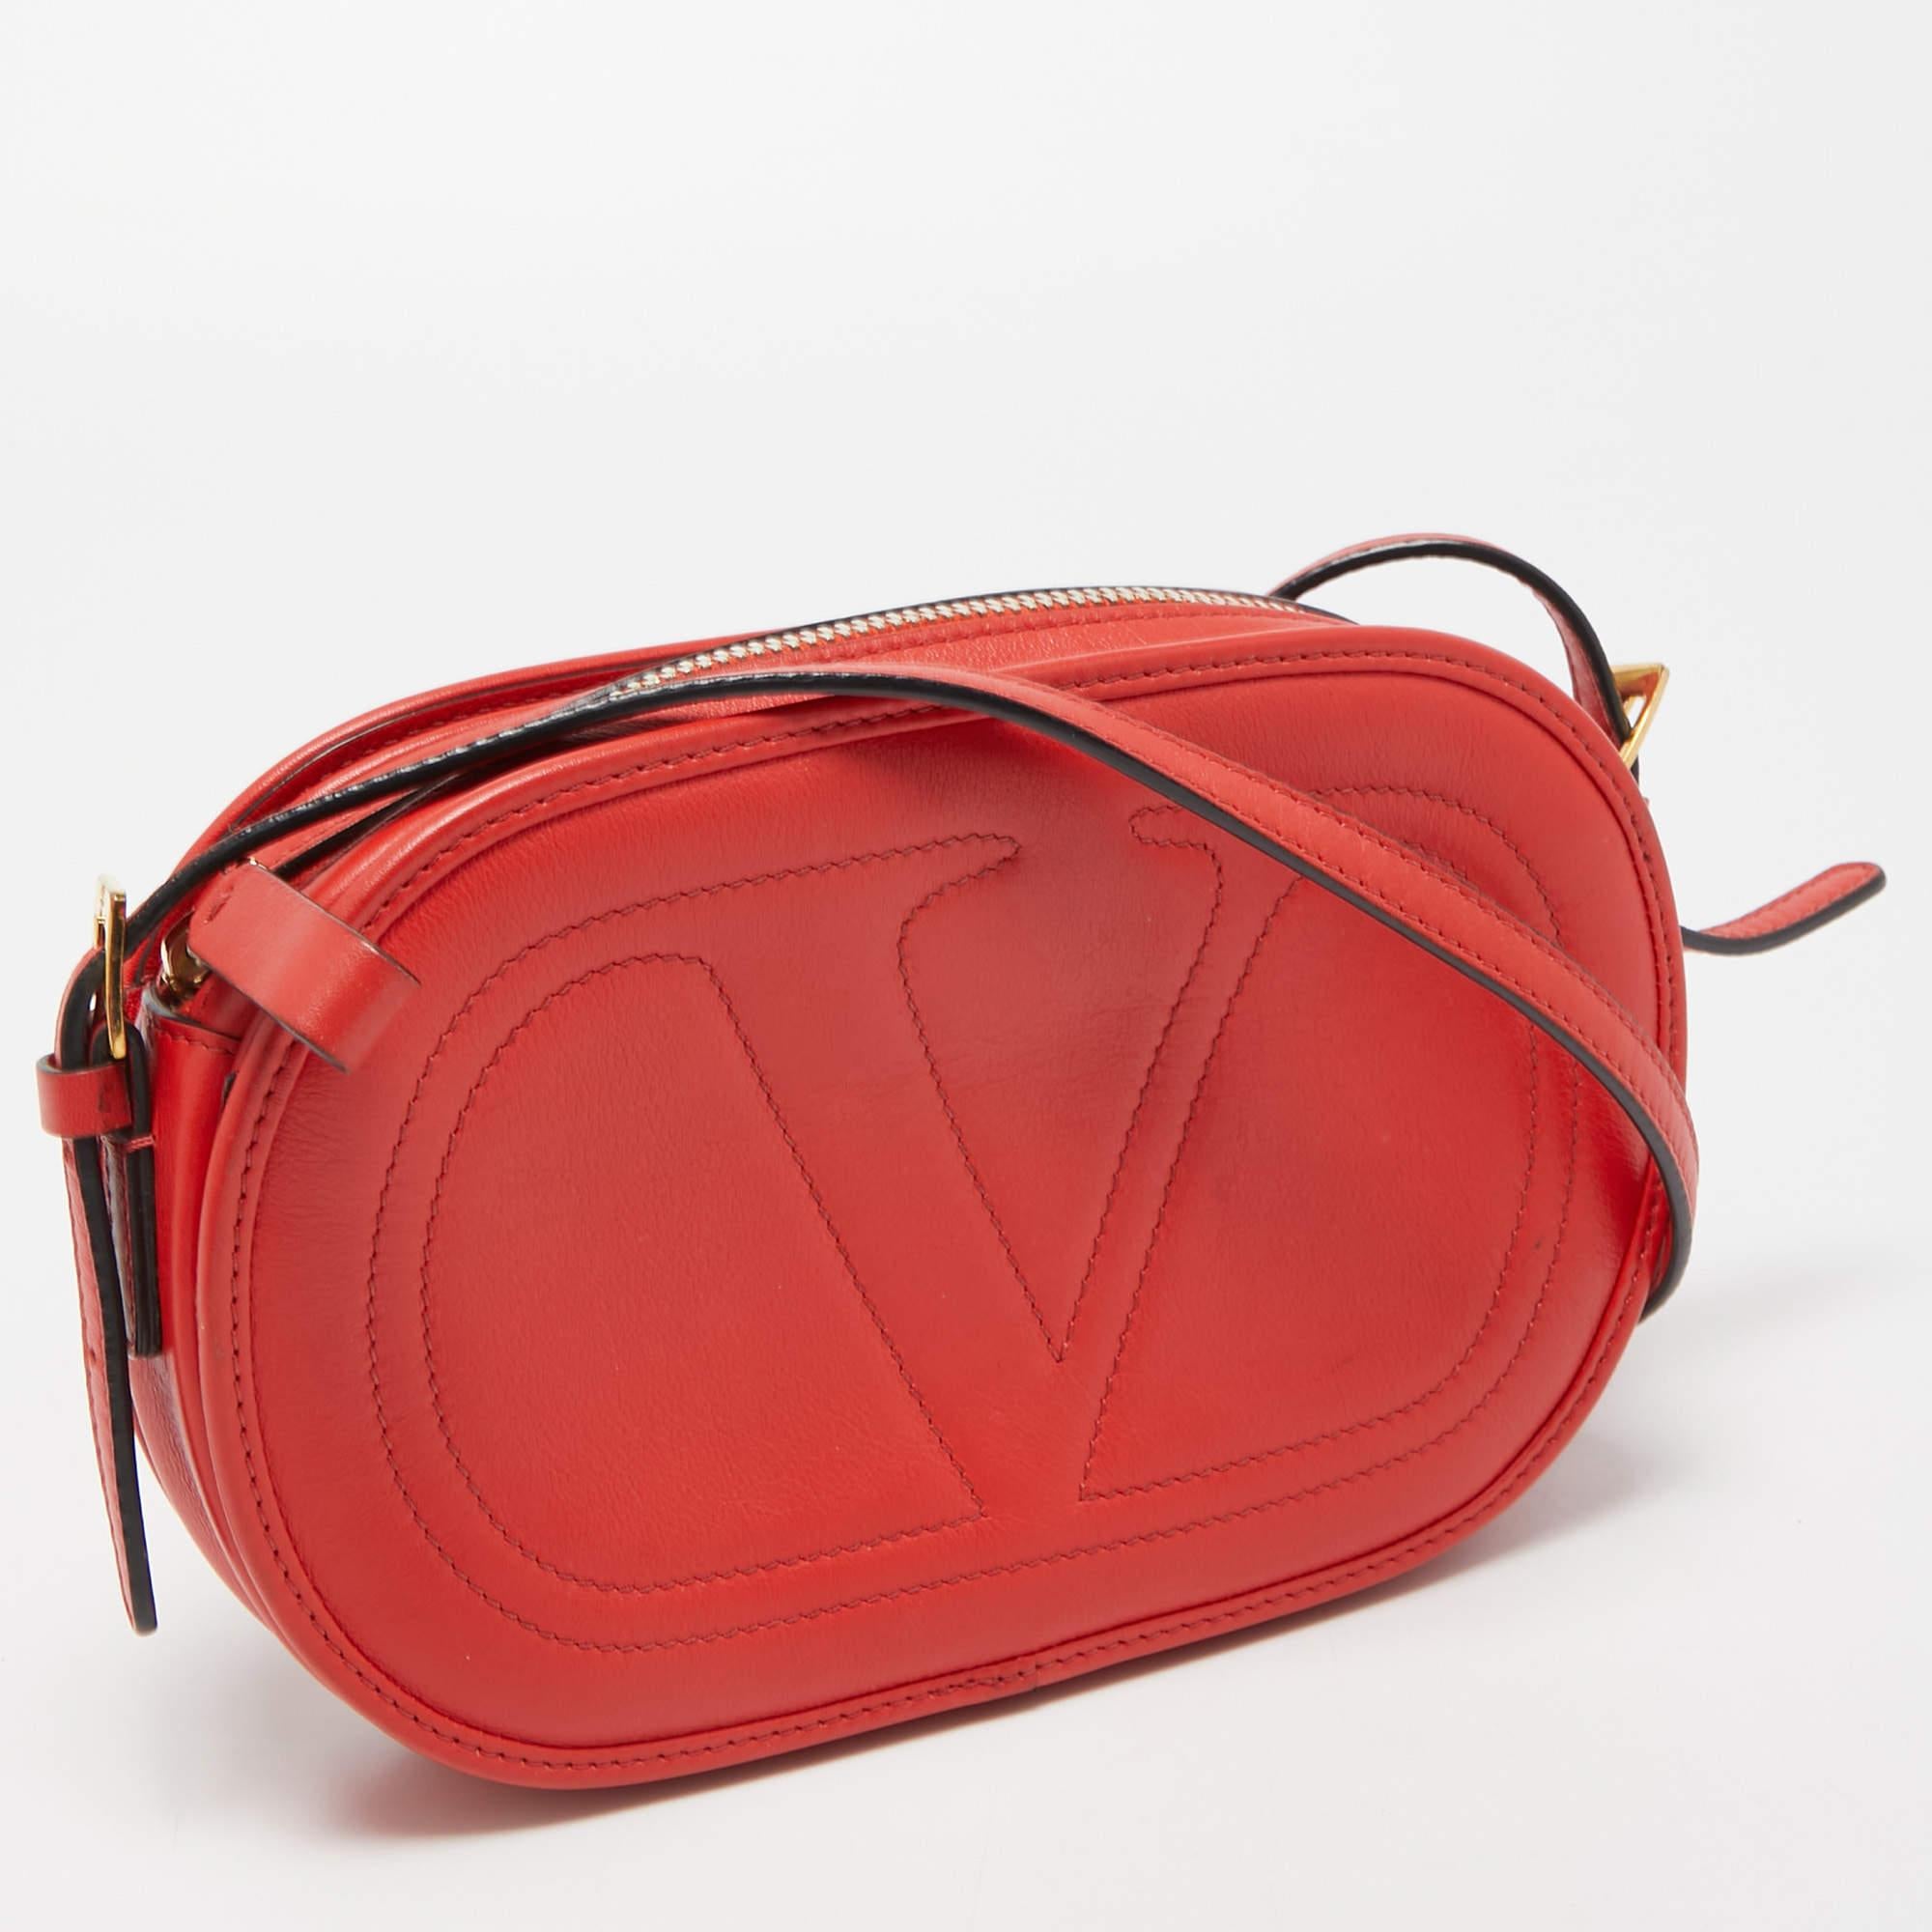 purse with v logo